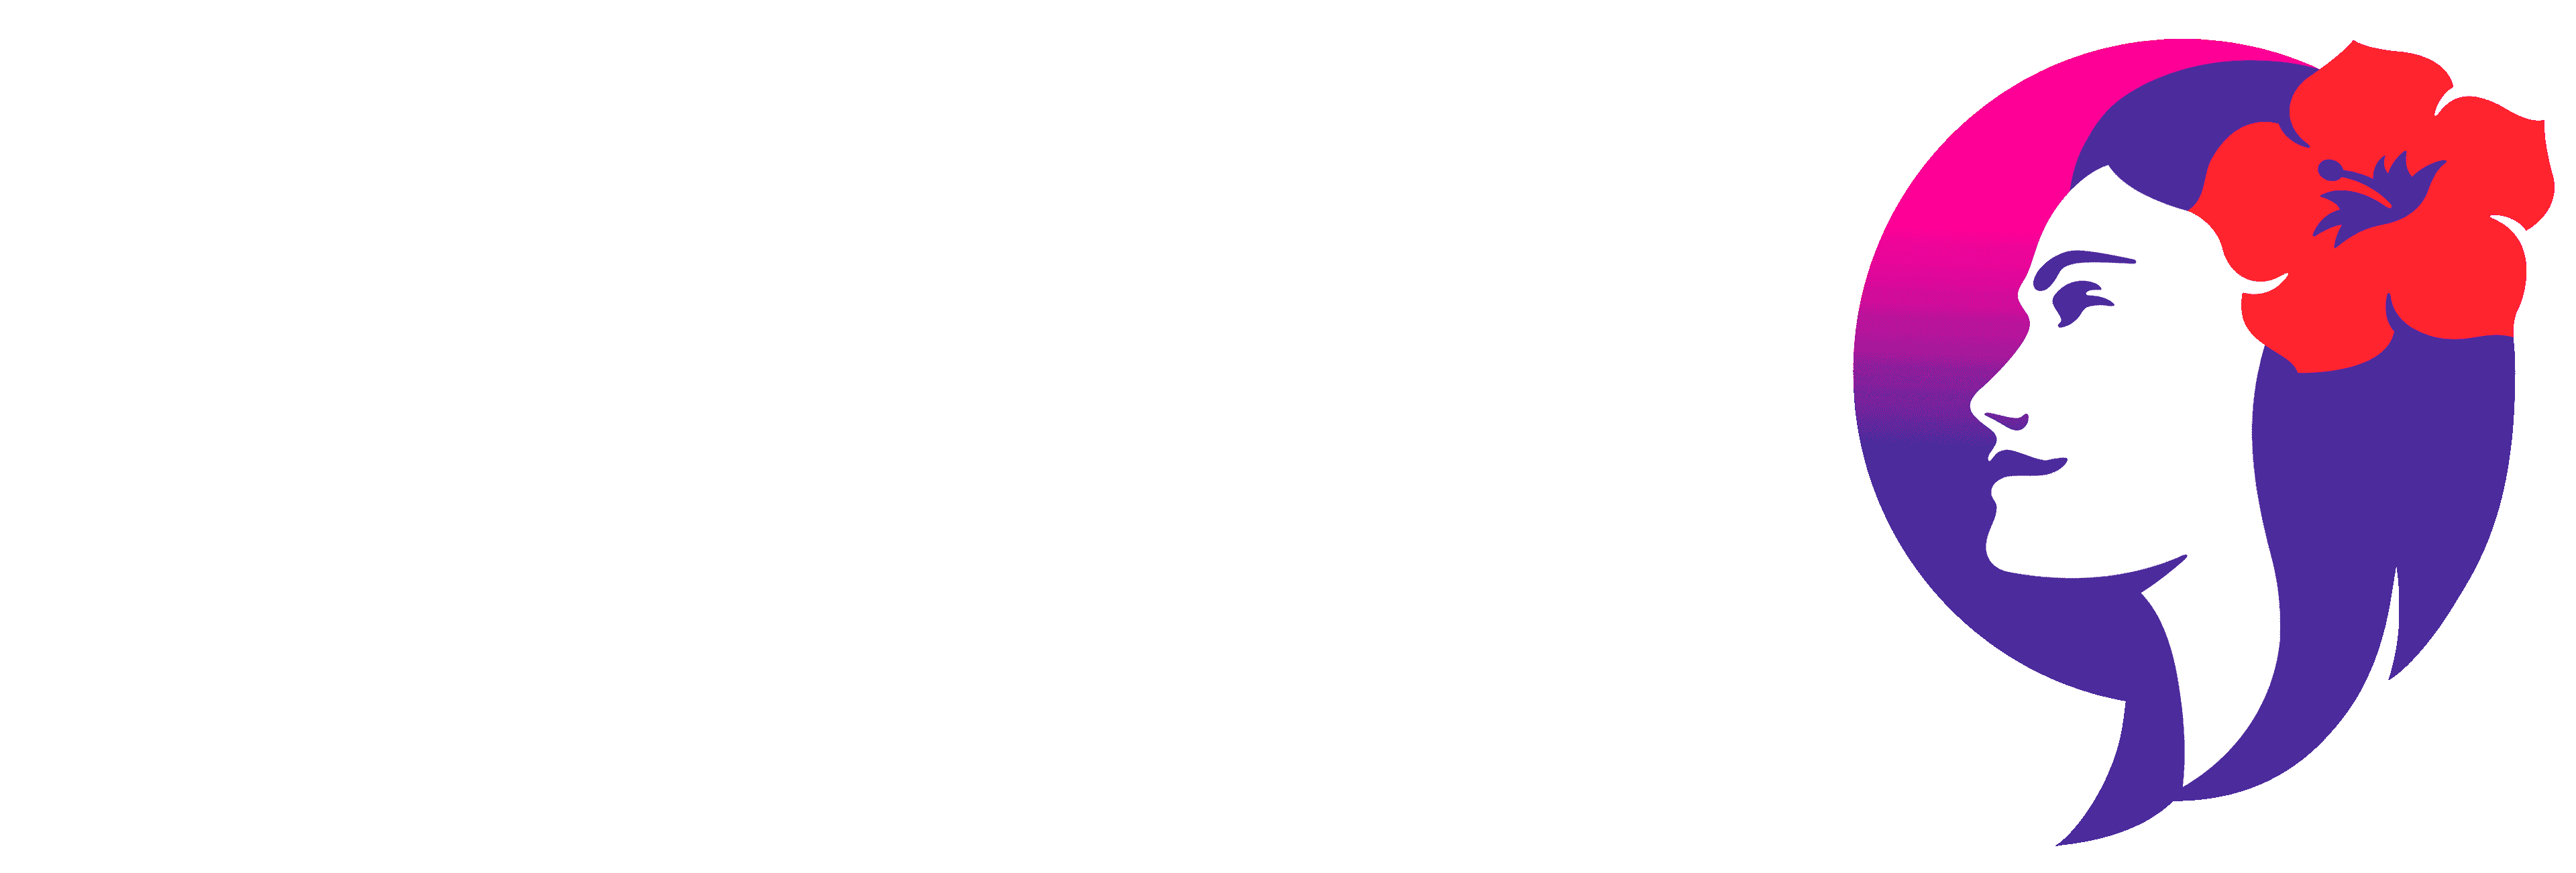 Hawaiian Airlines banner